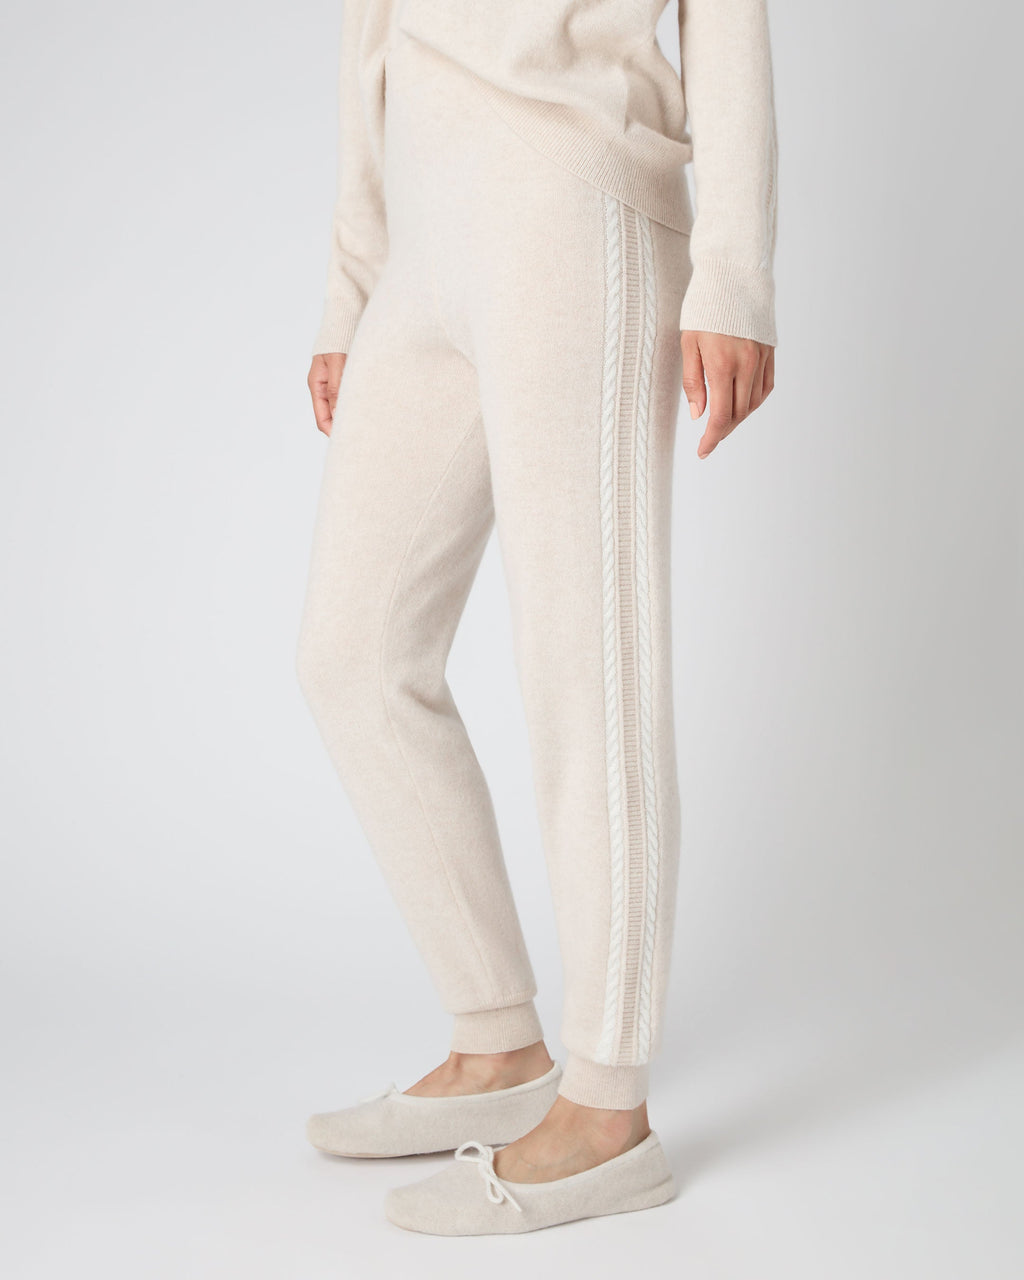 Wool and cashmere lounge joggers, Miiyu, Shop Women's Sleep Shorts Online